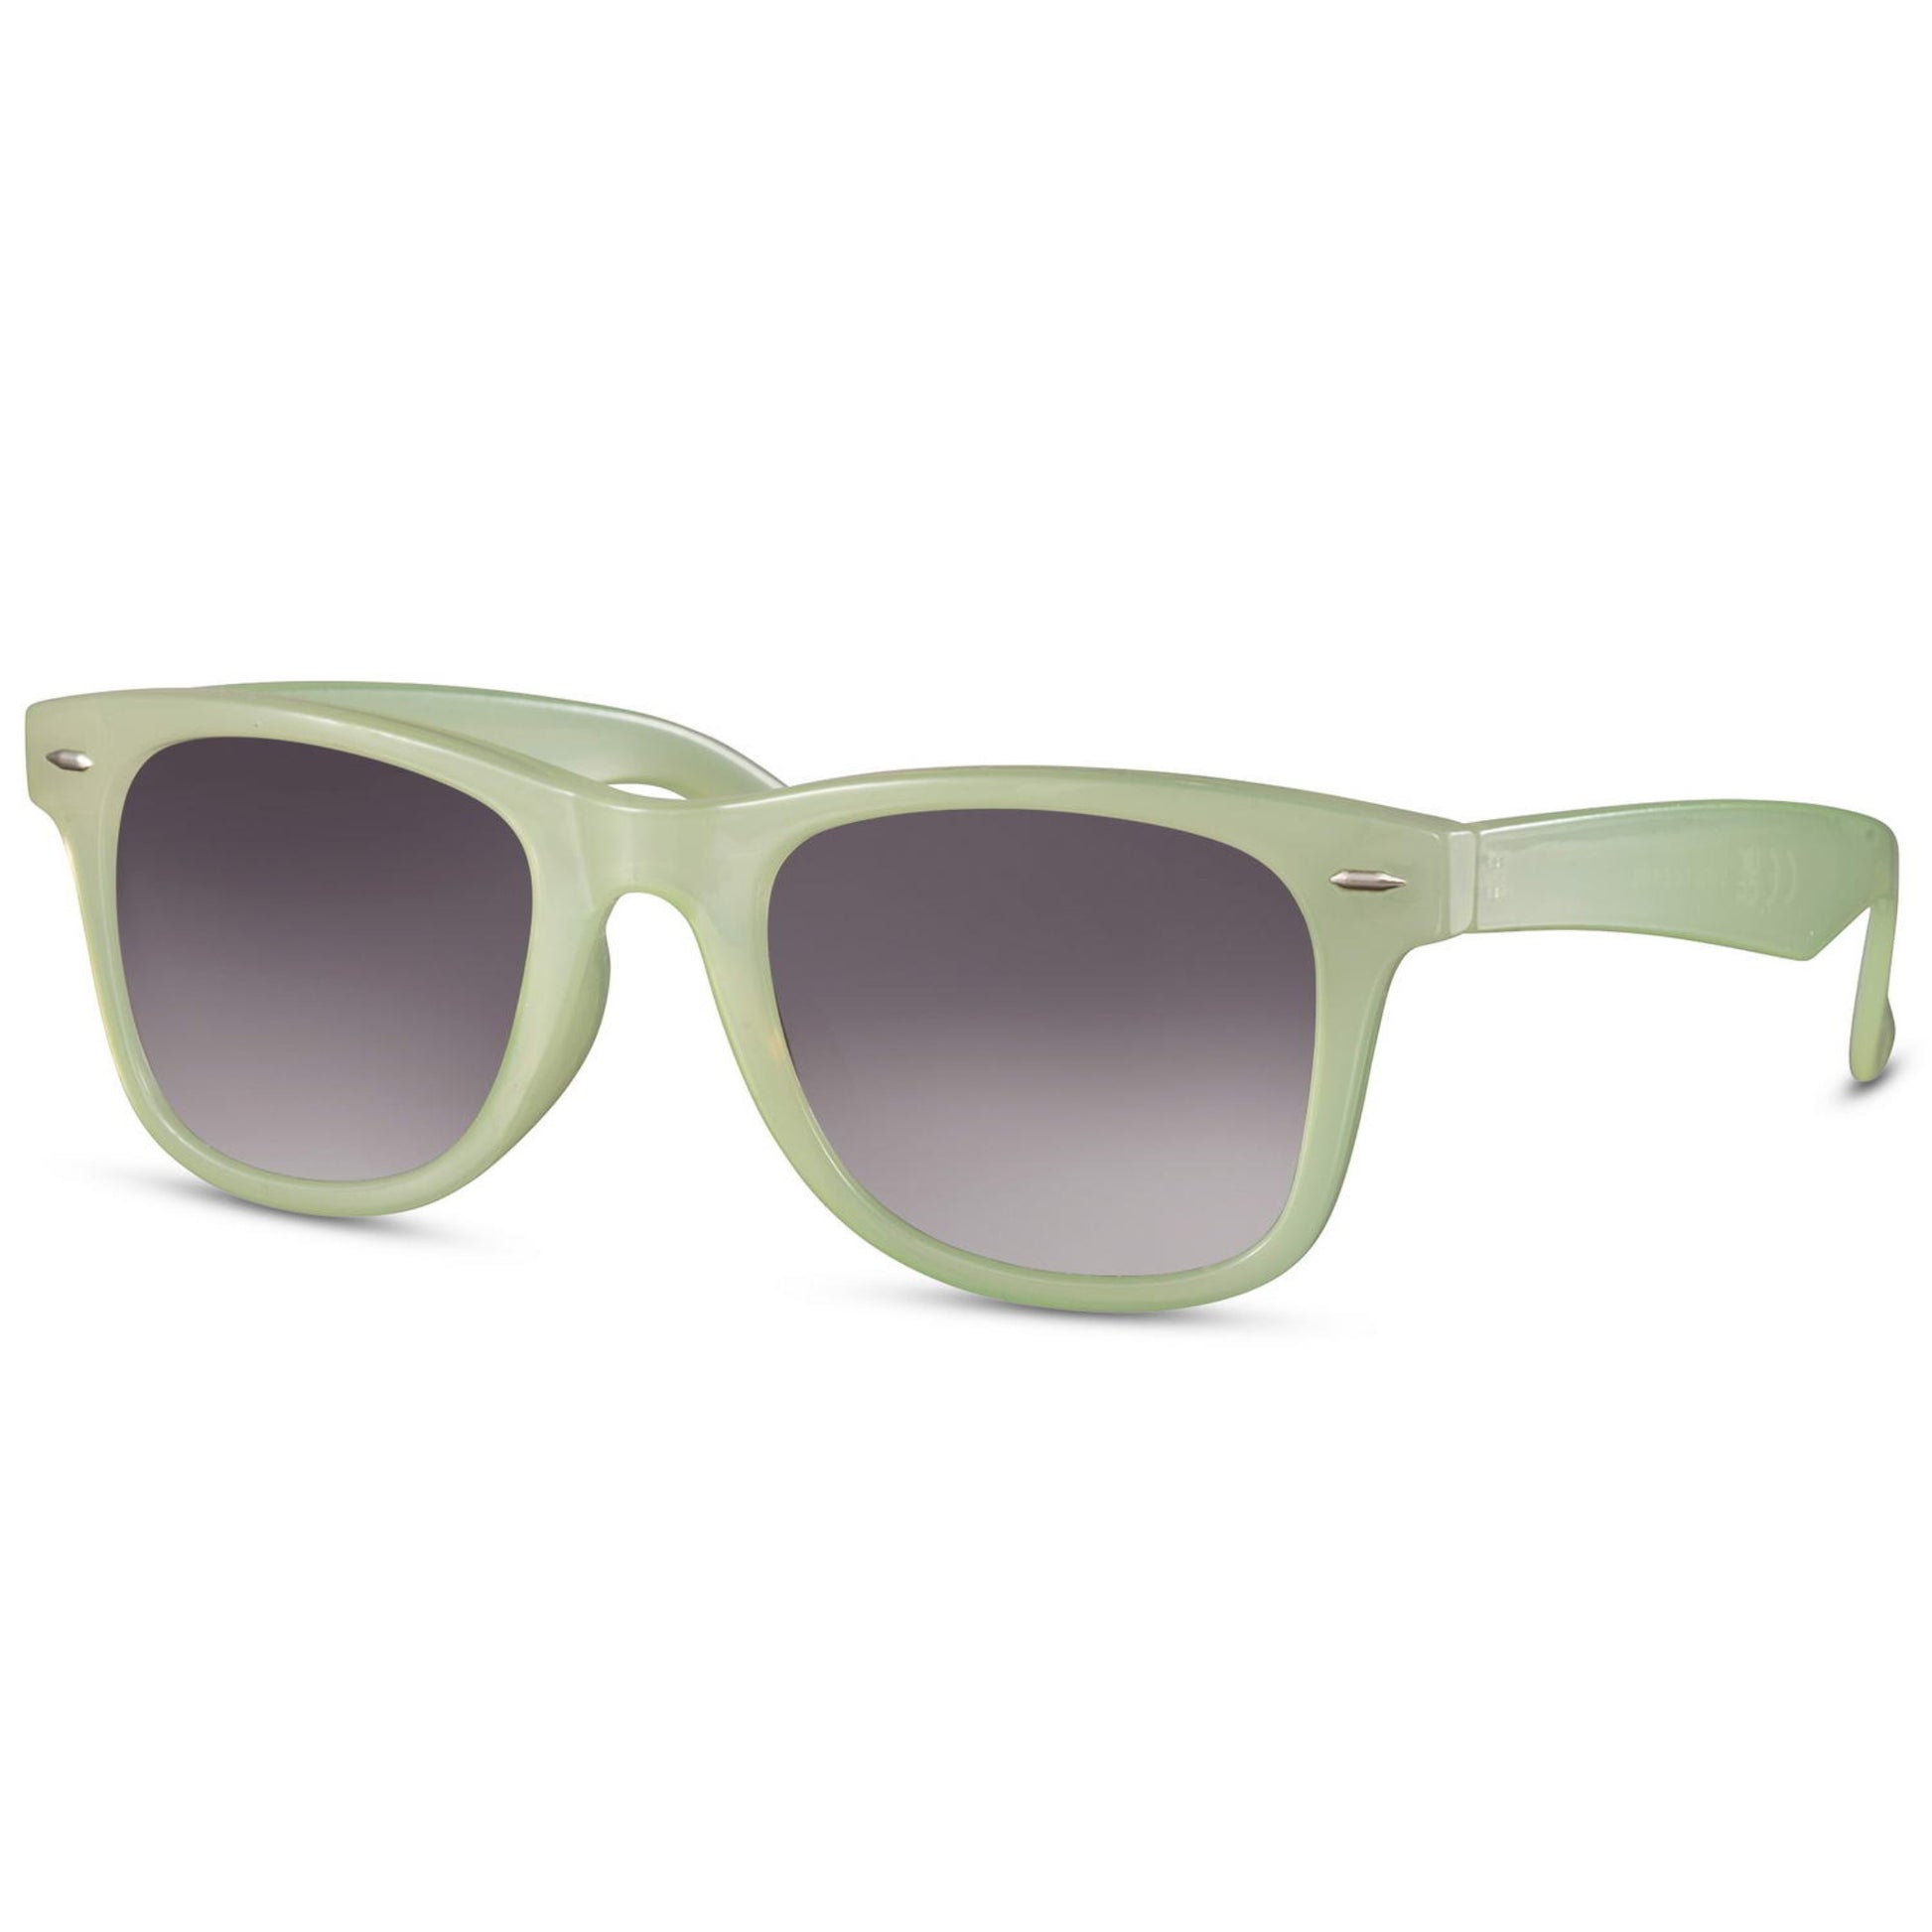 Nevada - Sunglasses - Exposure Sunglasses - NDL6190